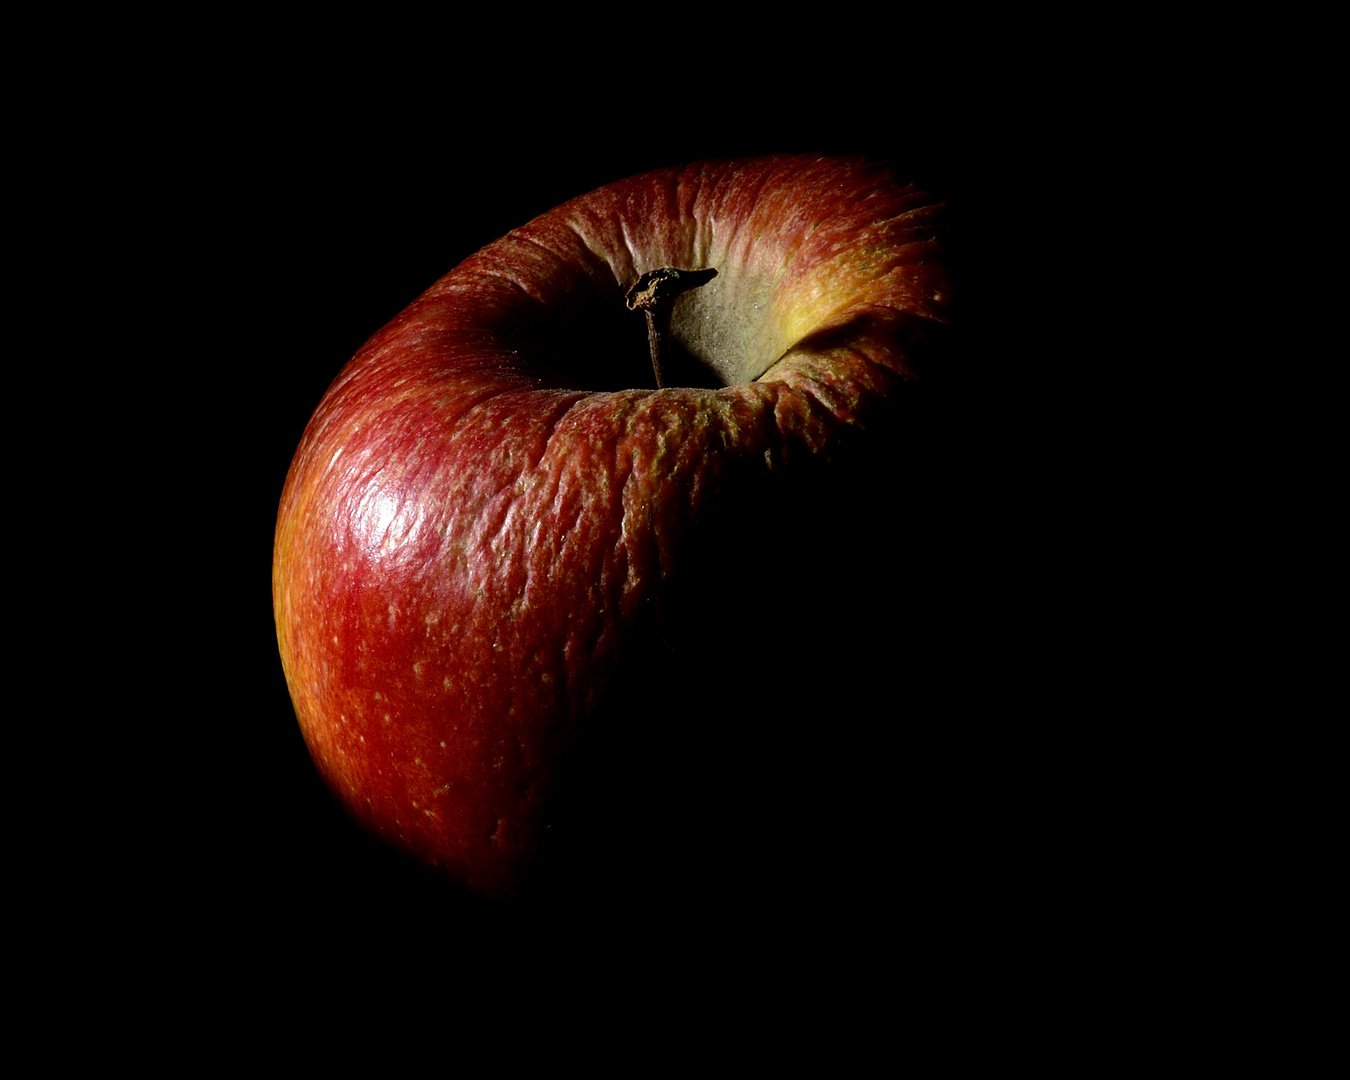 An apple a day keeps the dark away